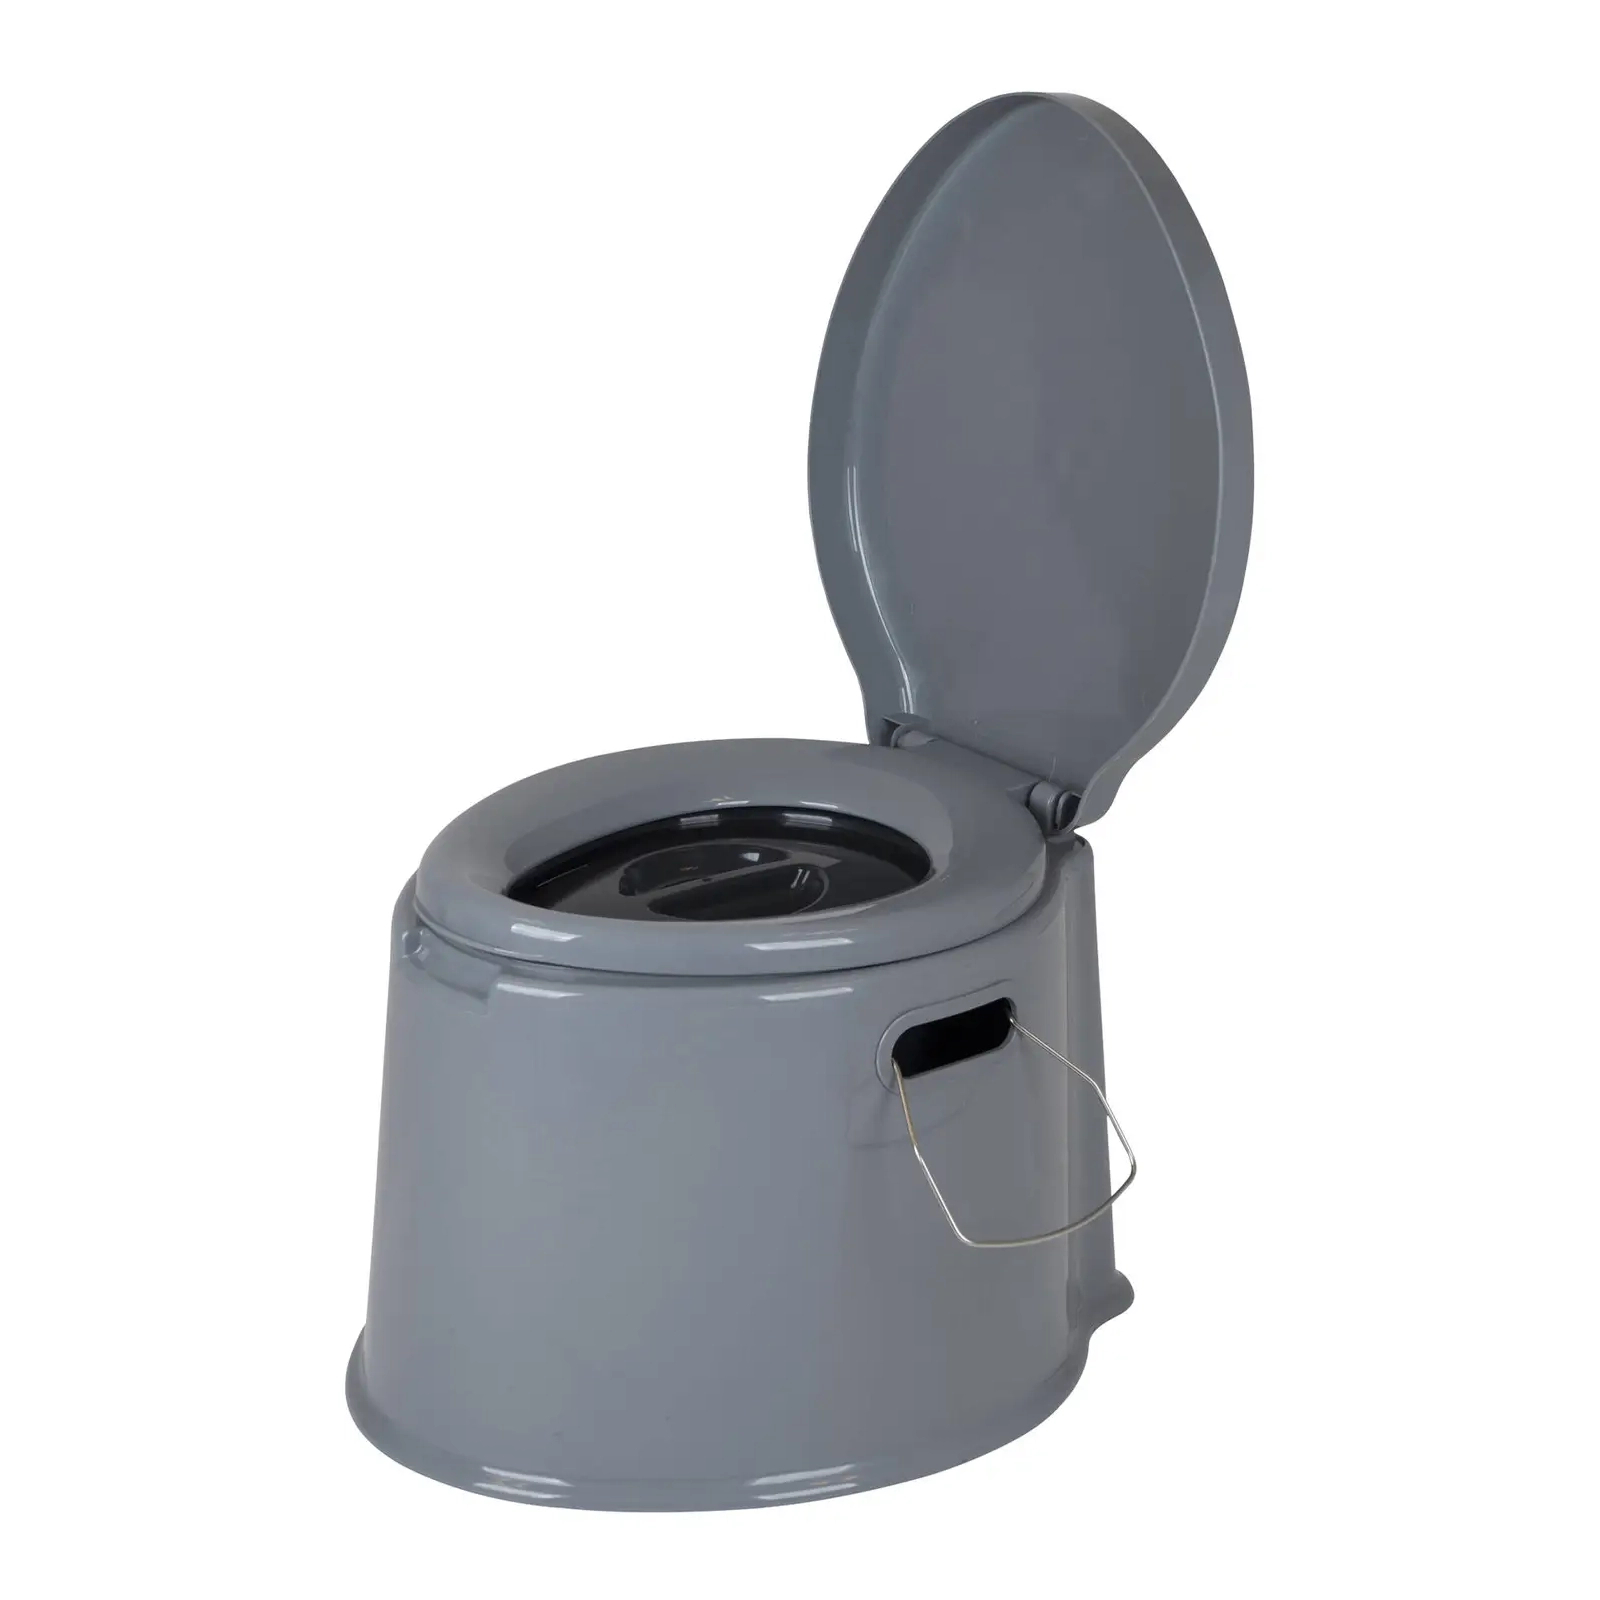 Биотуалет Bo-Camp Portable Toilet 7 Liters Grey (5502800)